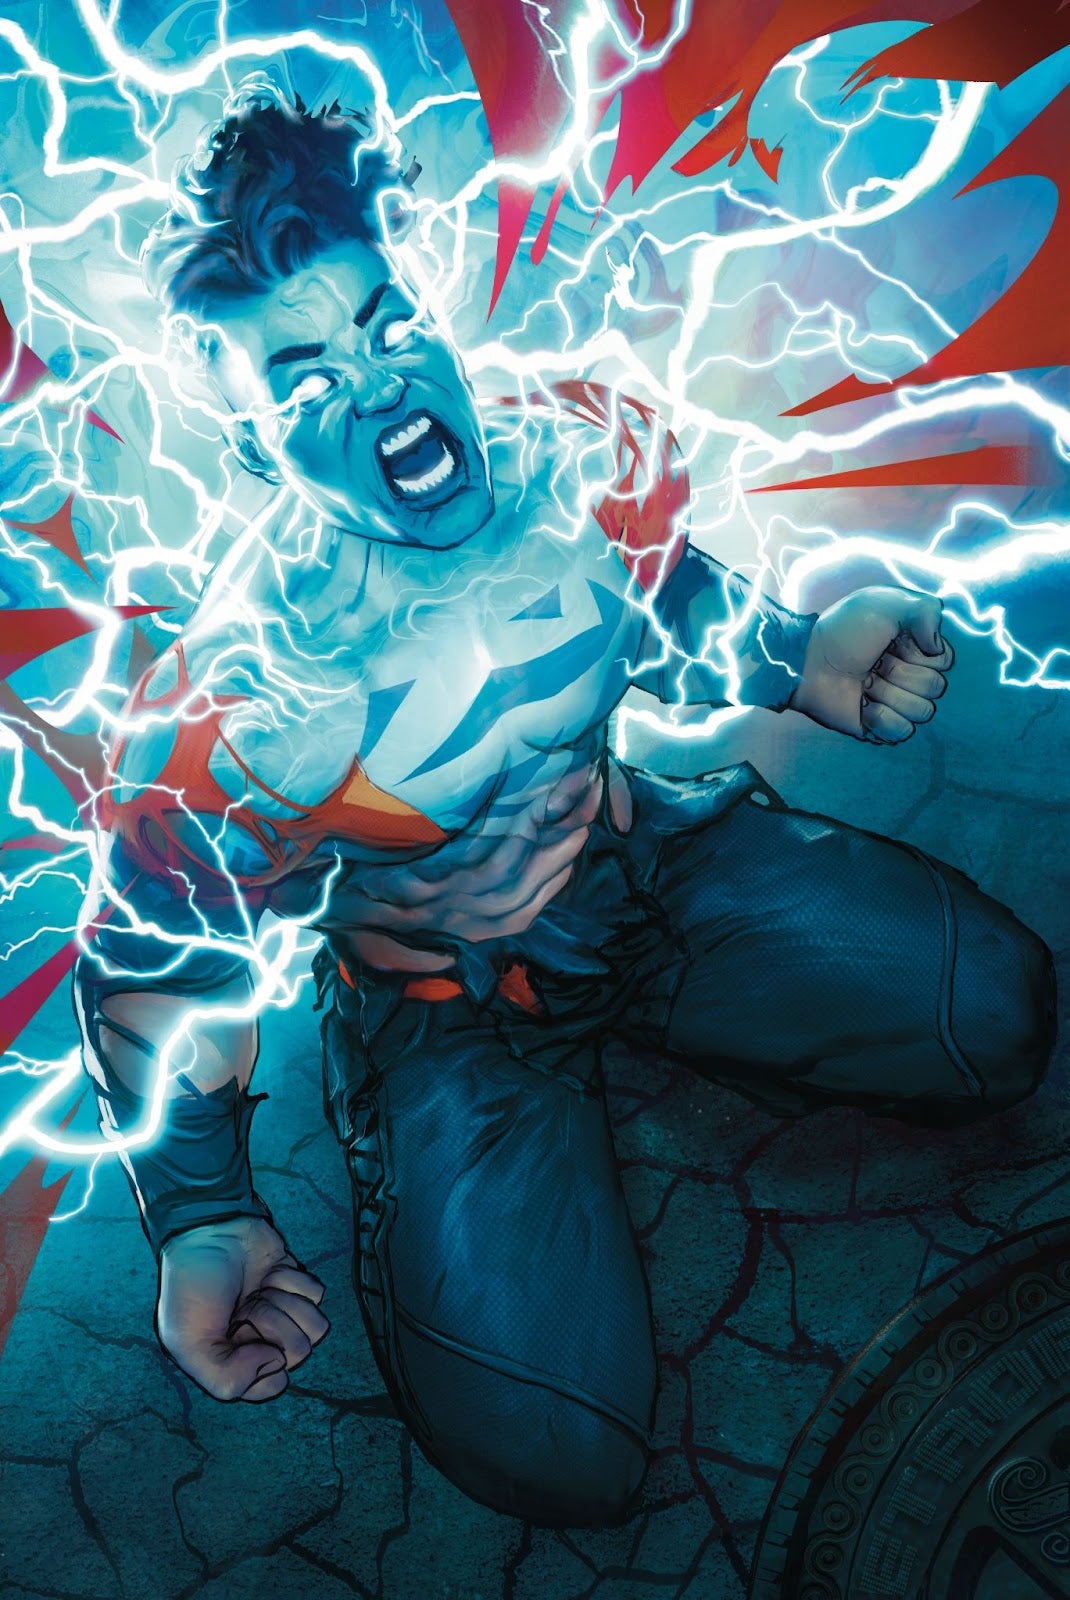 Jon Kent #1 cover by Rafa Sarmento. (Image: DC Comics)